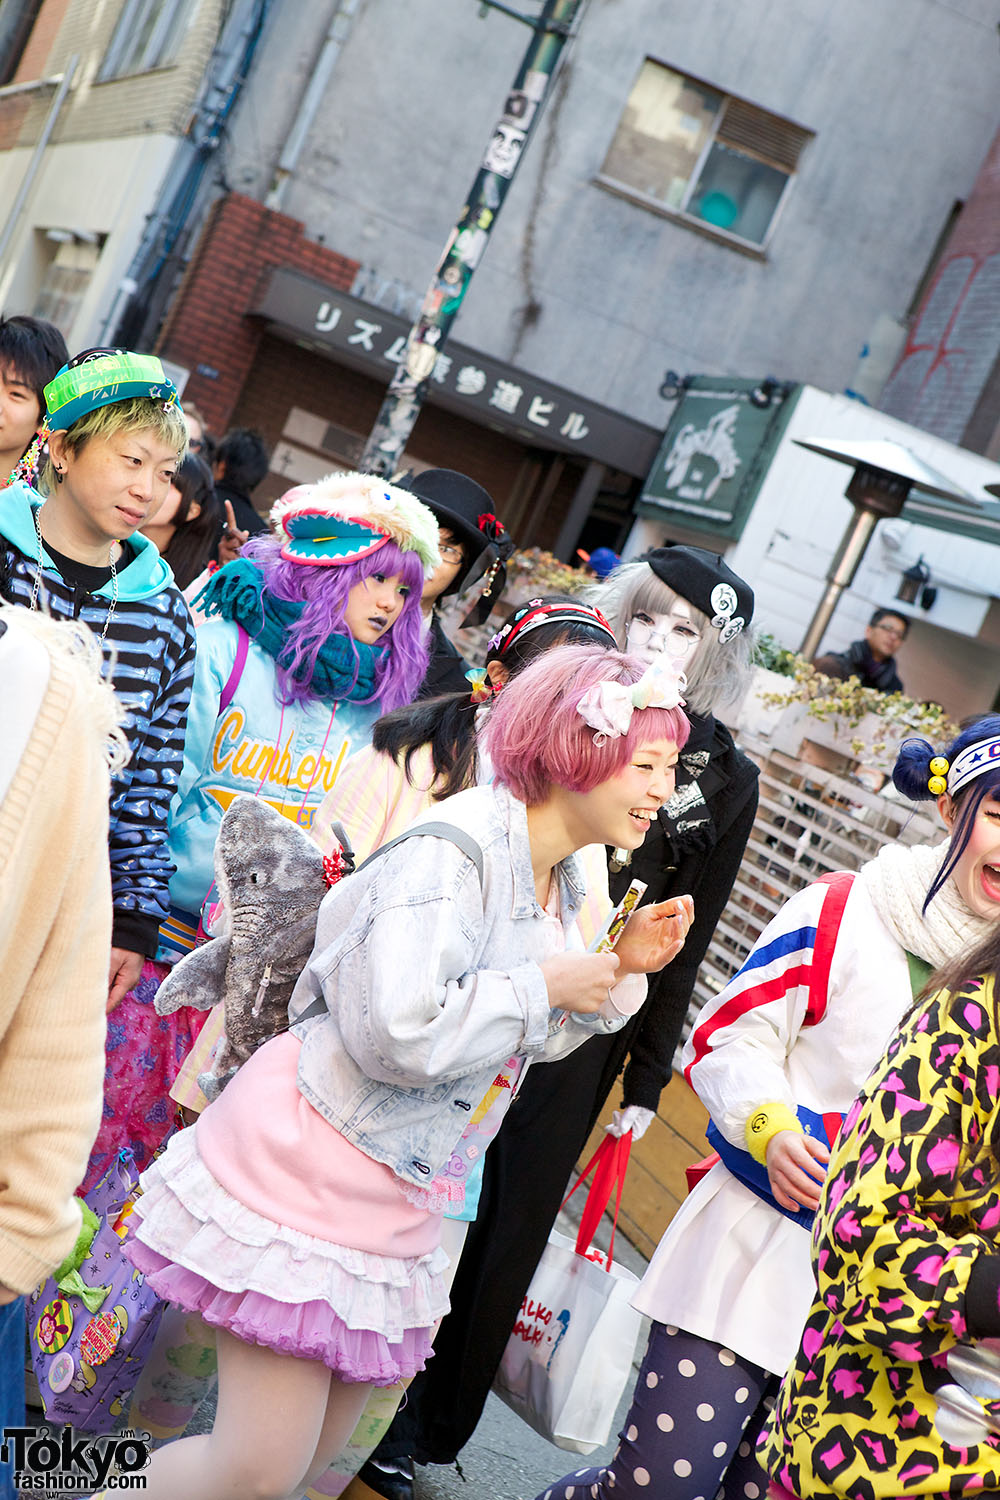 Download this Harajuku Fashion Walk picture